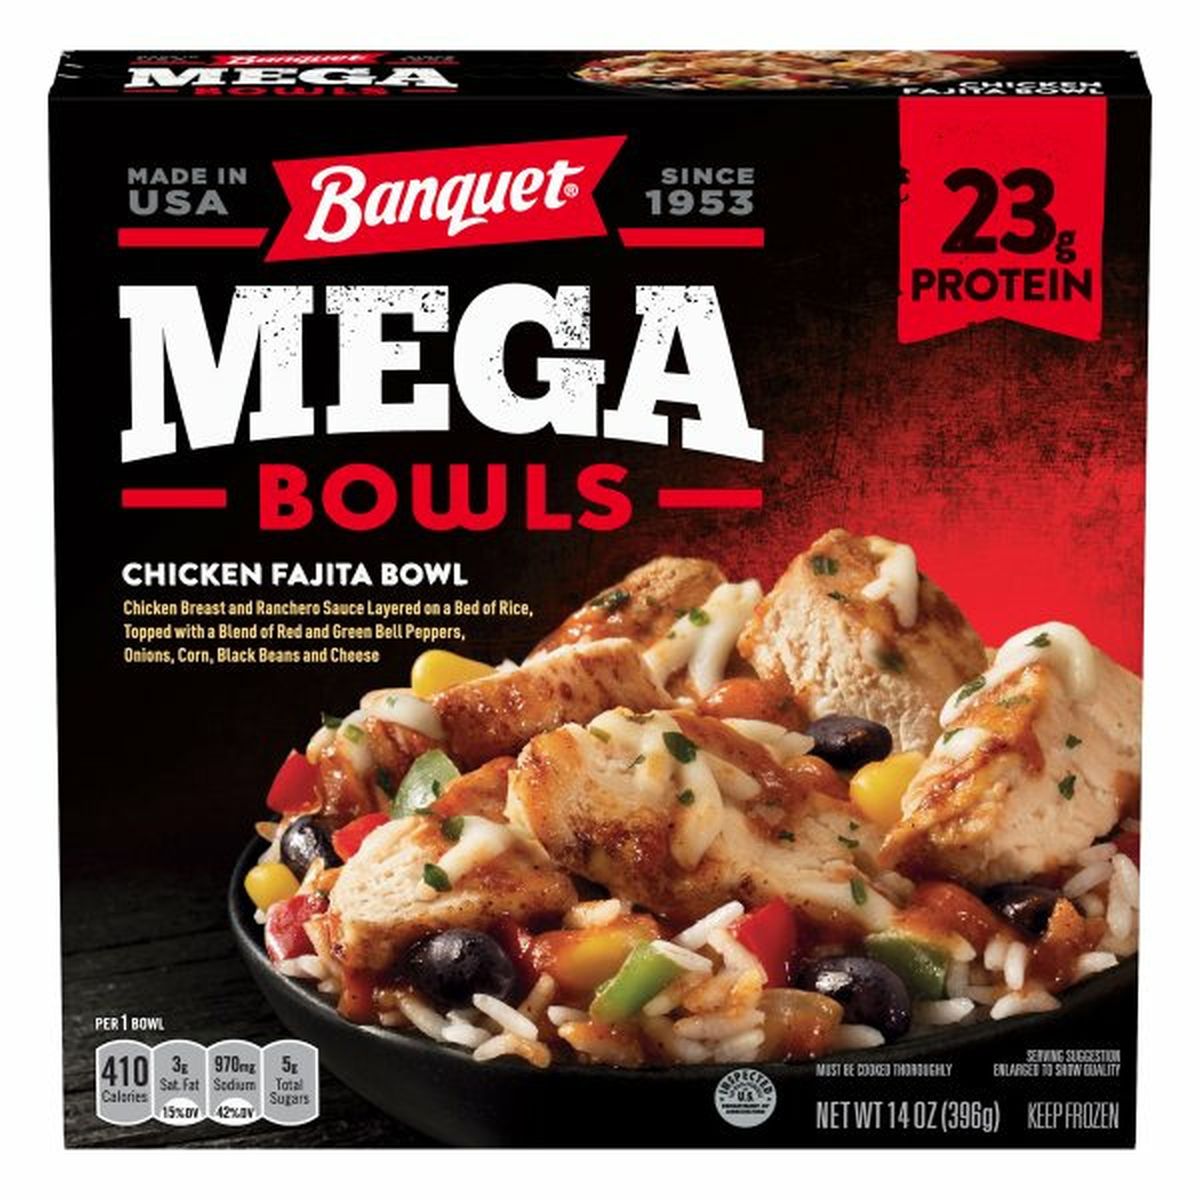 Calories in Banquet Mega Bowls Chicken Fajita Bowls